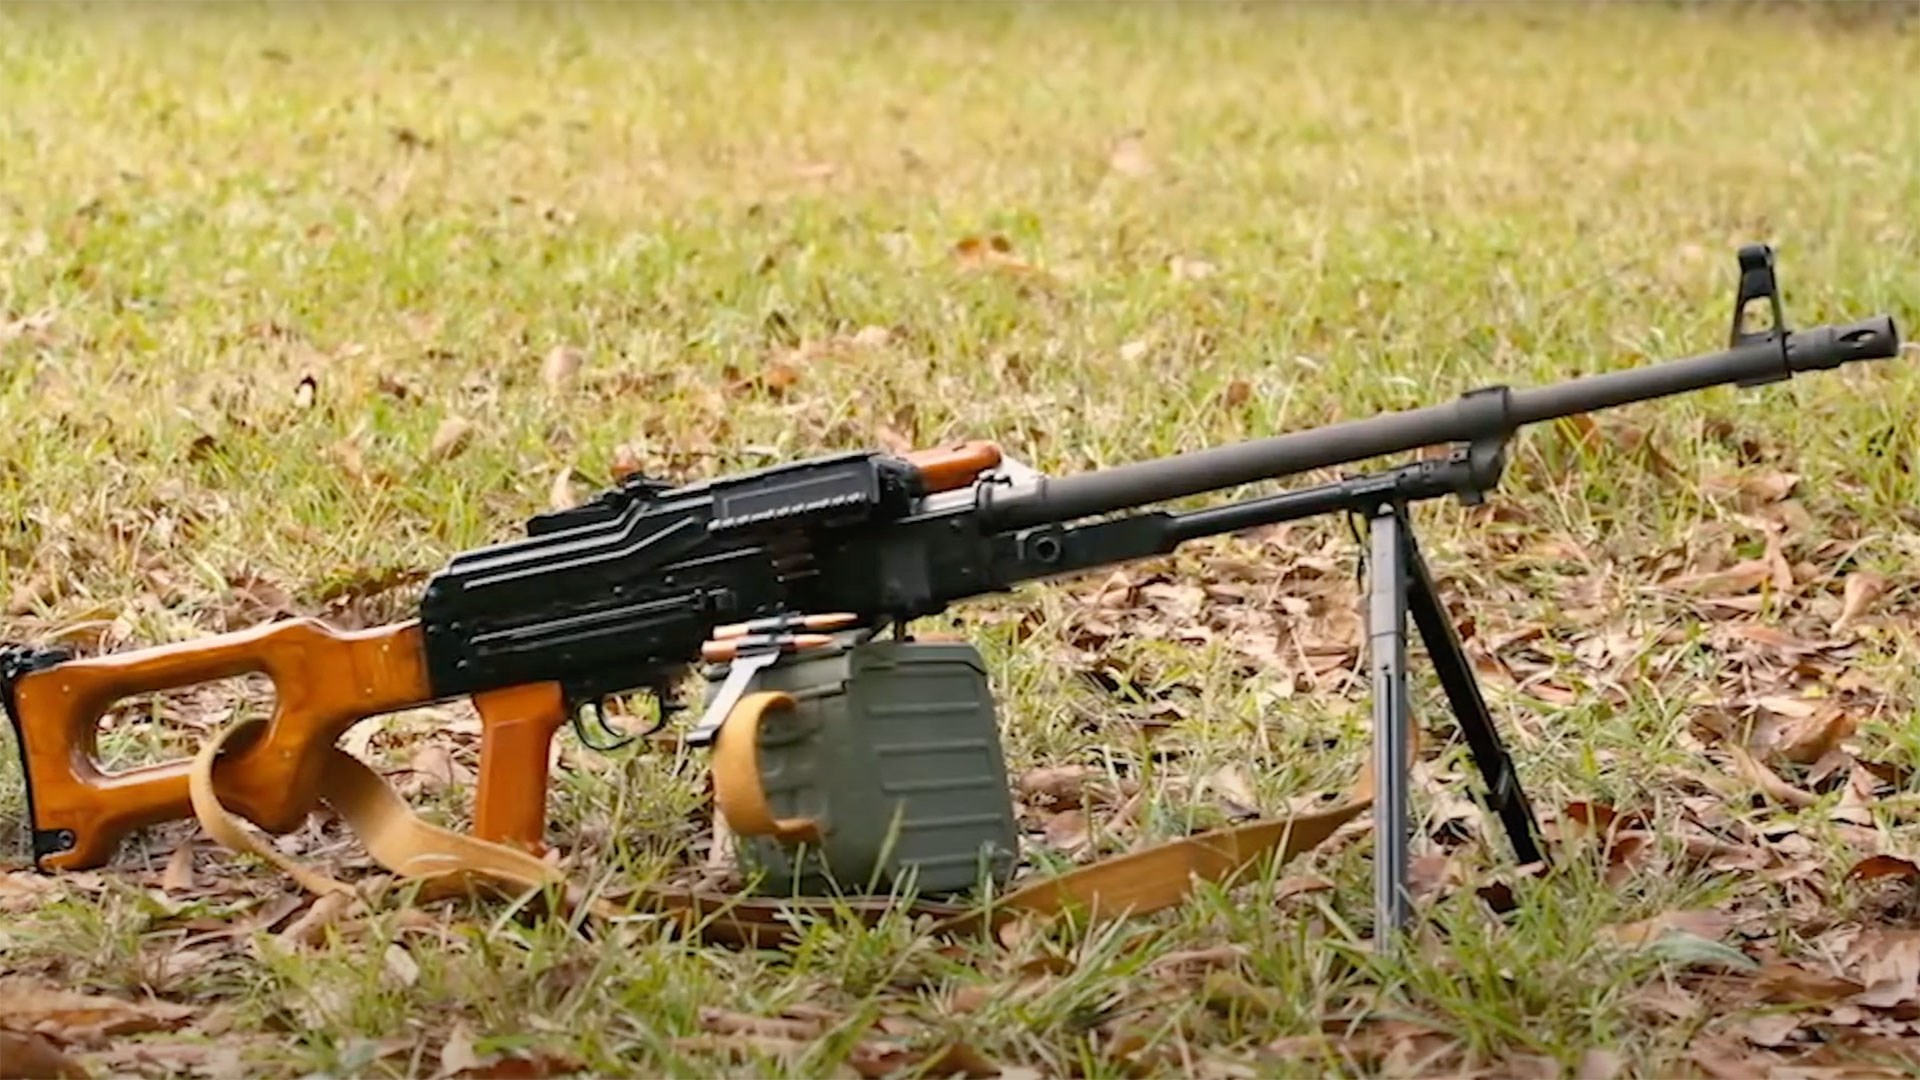 The Russian PKM machine gun.